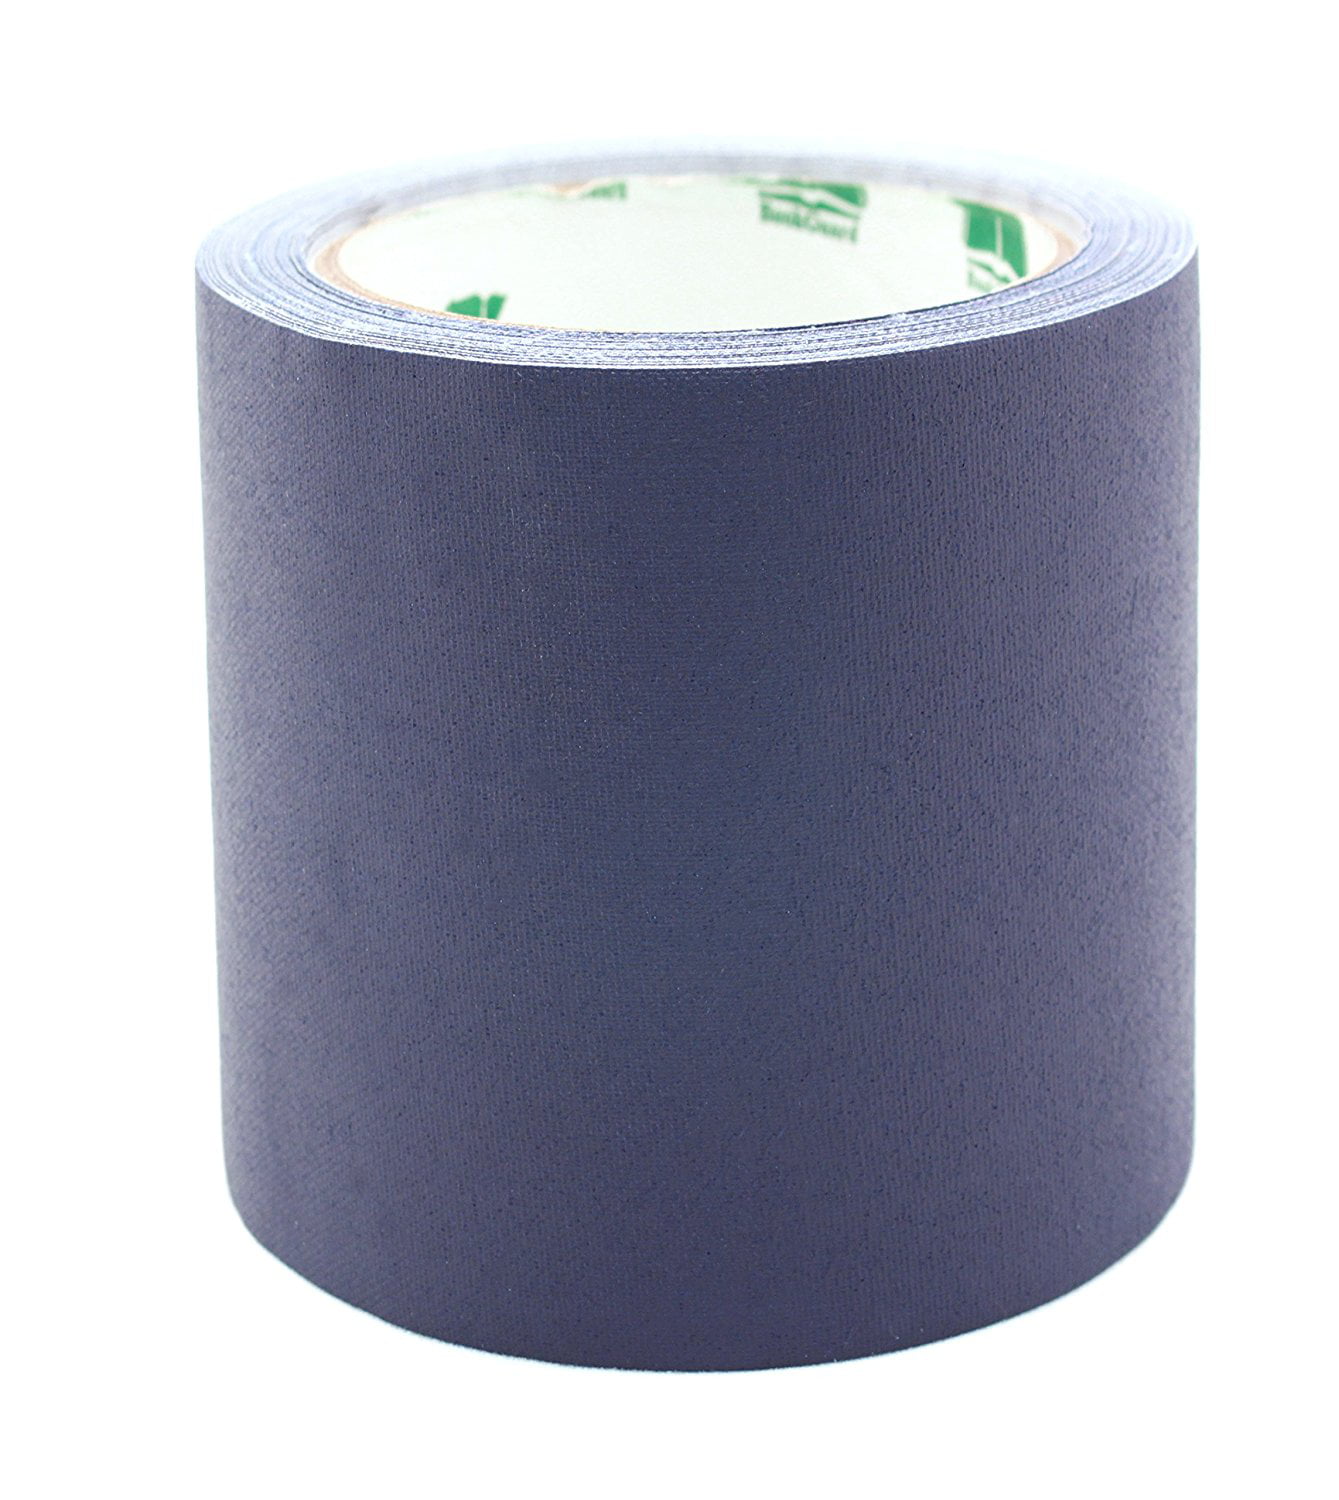 2 Navy Blue Colored Premium-Cloth Book Binding Repair Tape BookGuard Brand 15 Yard Roll 